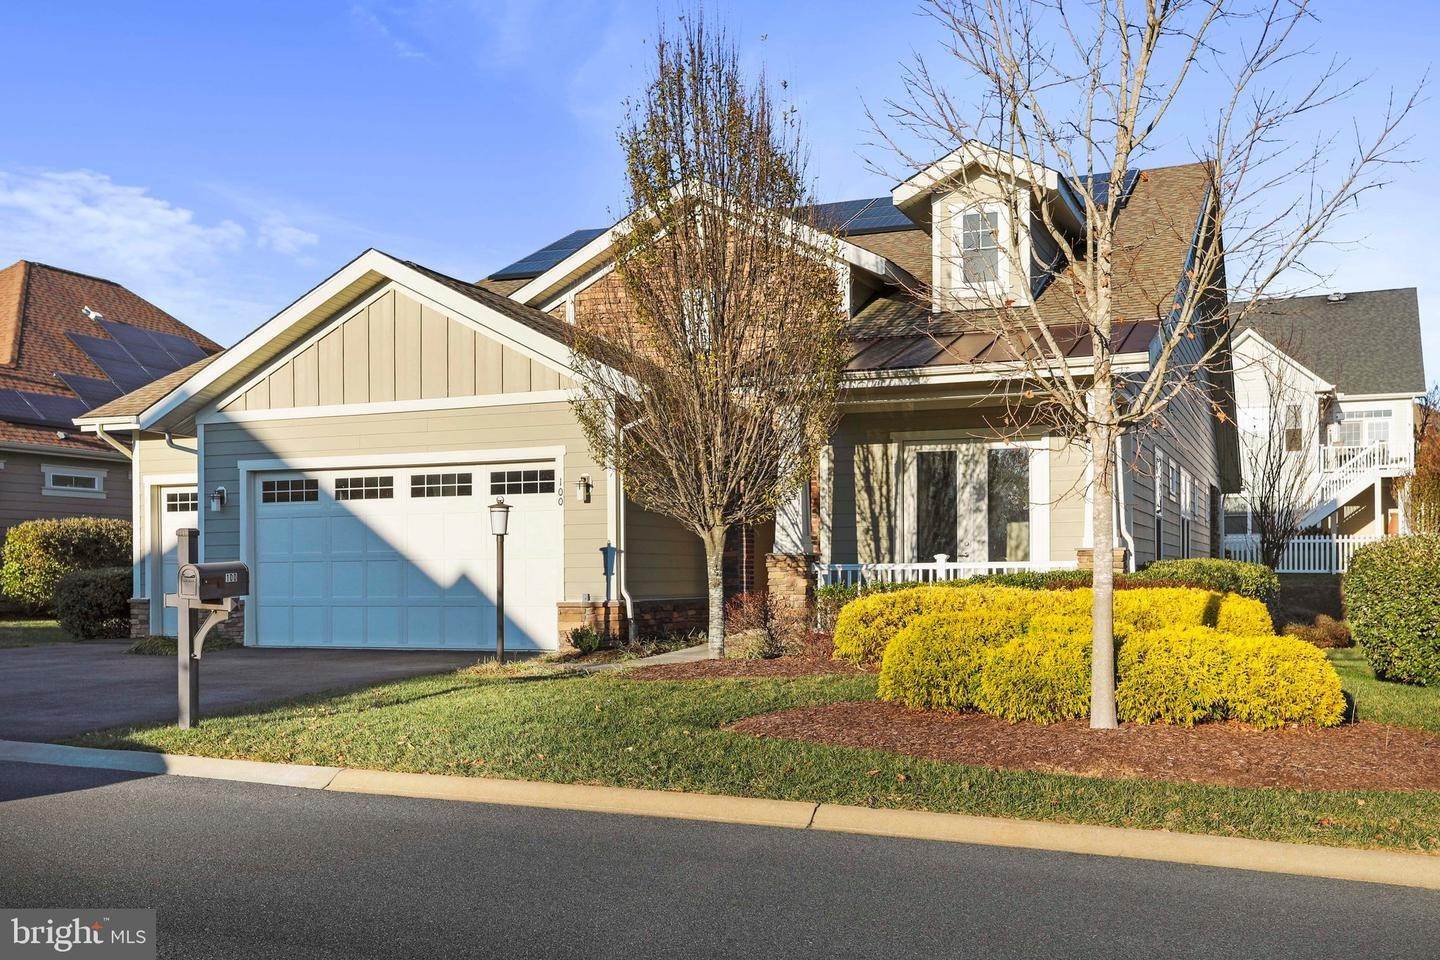 Single Family Homes για την Πώληση στο Lake Frederick, Βιρτζινια 22630 Ηνωμένες Πολιτείες